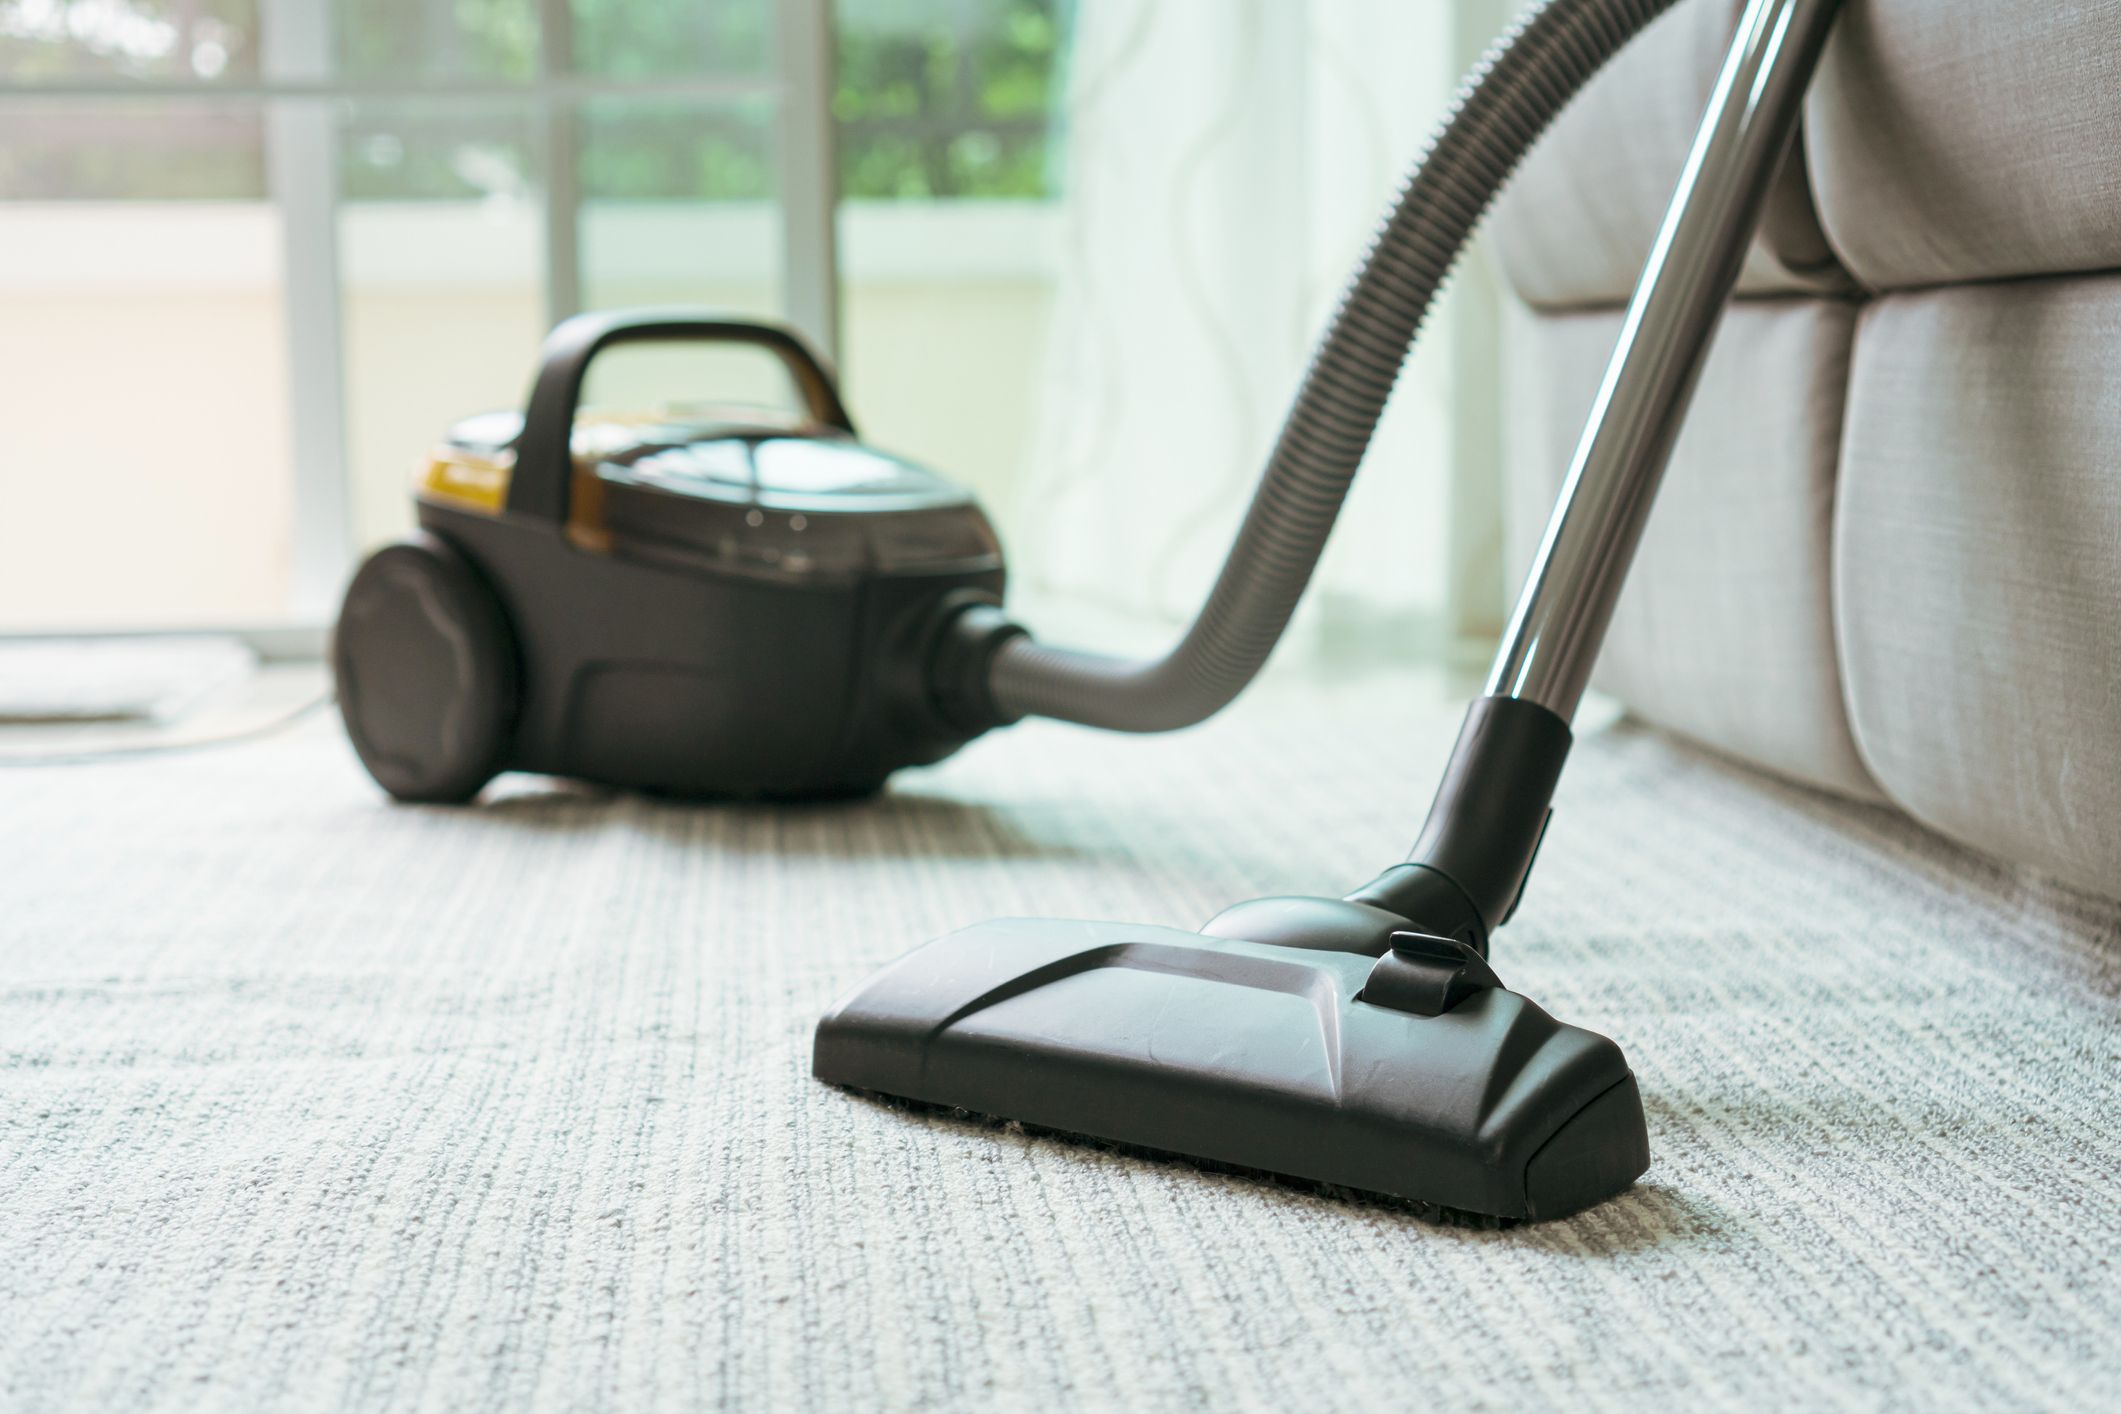 8 Best Hepa Vacuum Cleaners Reviews 2021, Best Rated Vacuum Cleaners For Carpet And Hardwood Floors